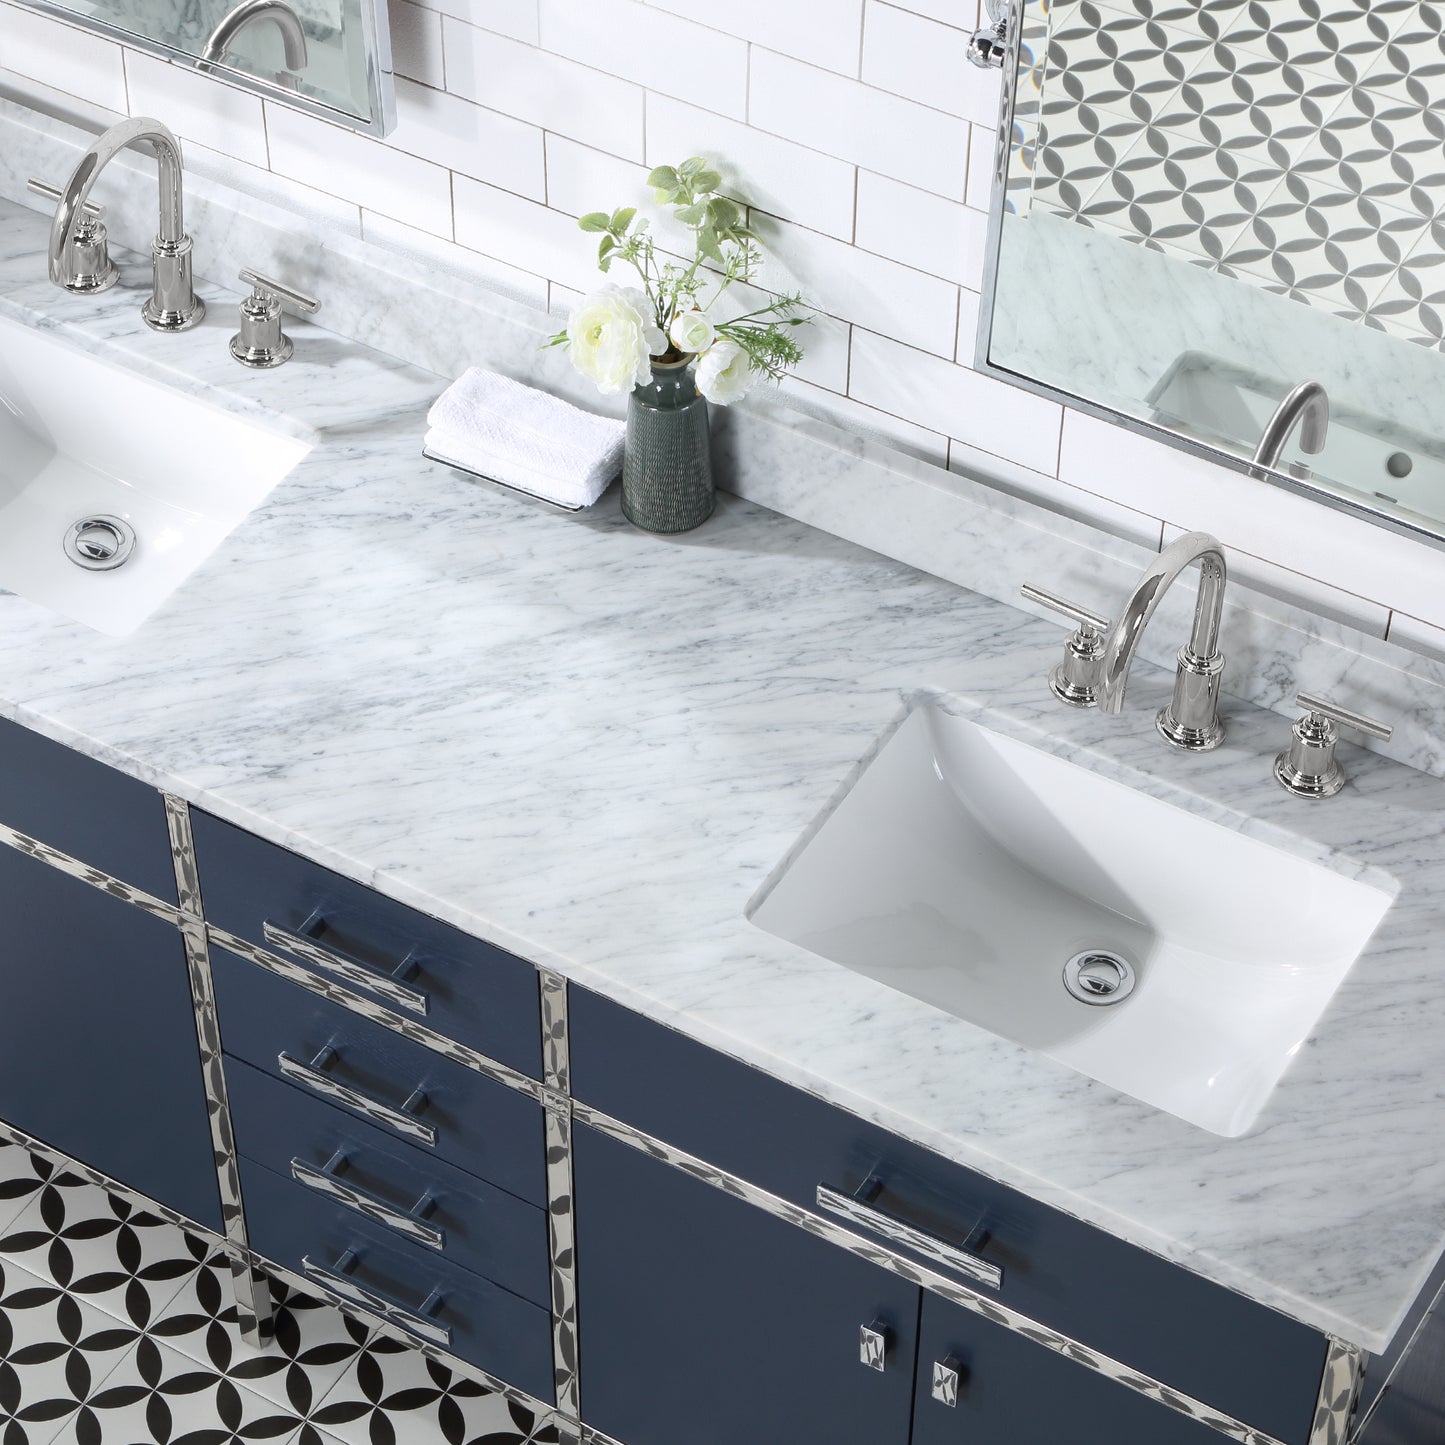 Water Creation Marquis 72" Inch Double Sink Carrara White Marble Countertop Vanity in Monarch Blue - Luxe Bathroom Vanities